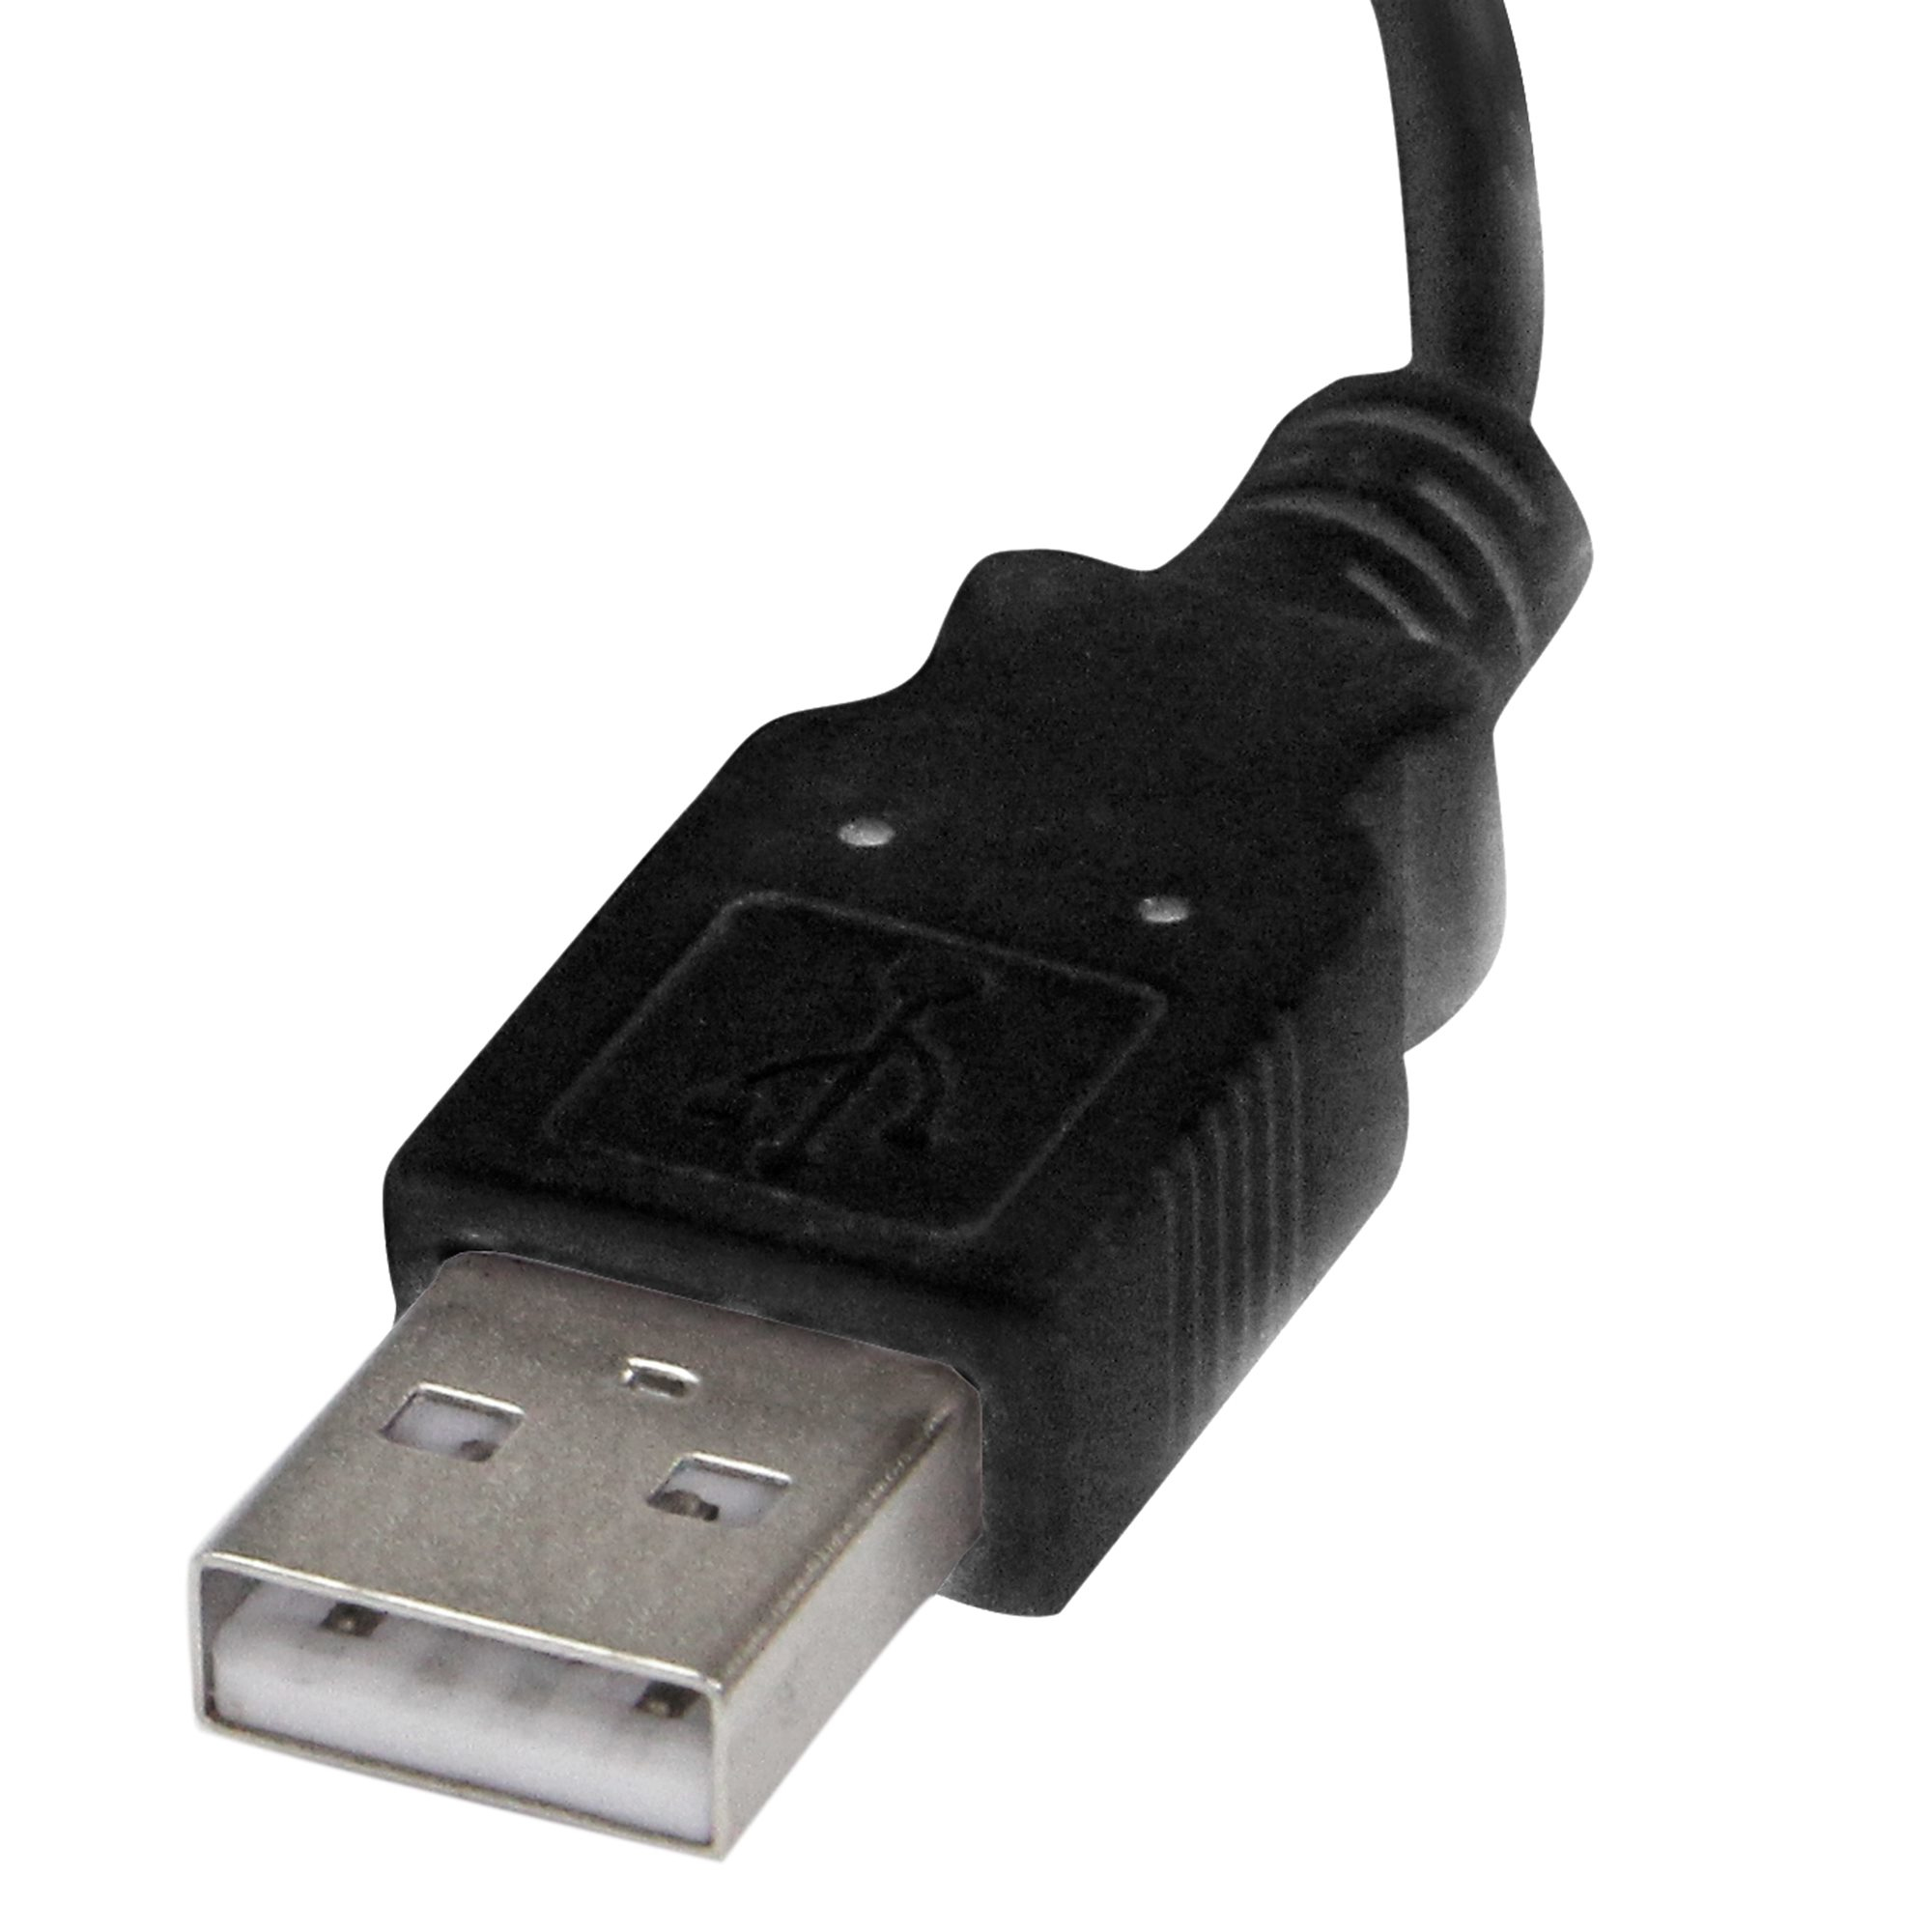 StarTech.com 56K USB Einwahl und Fax Modem - V.92